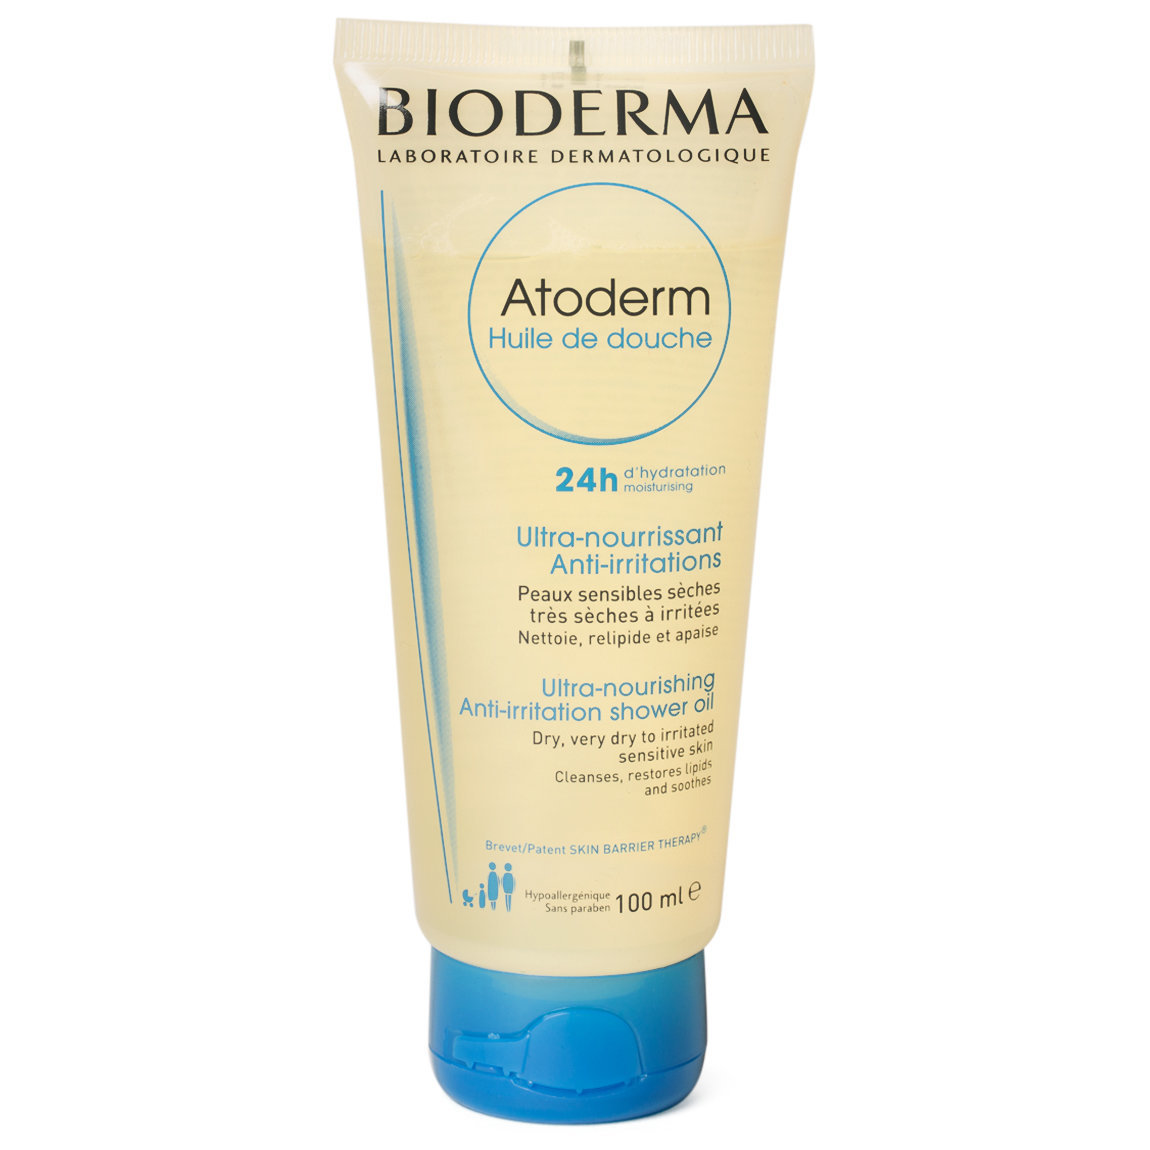 Bioderma Atoderm Shower Oil 100 ml alternative view 1 - product swatch.